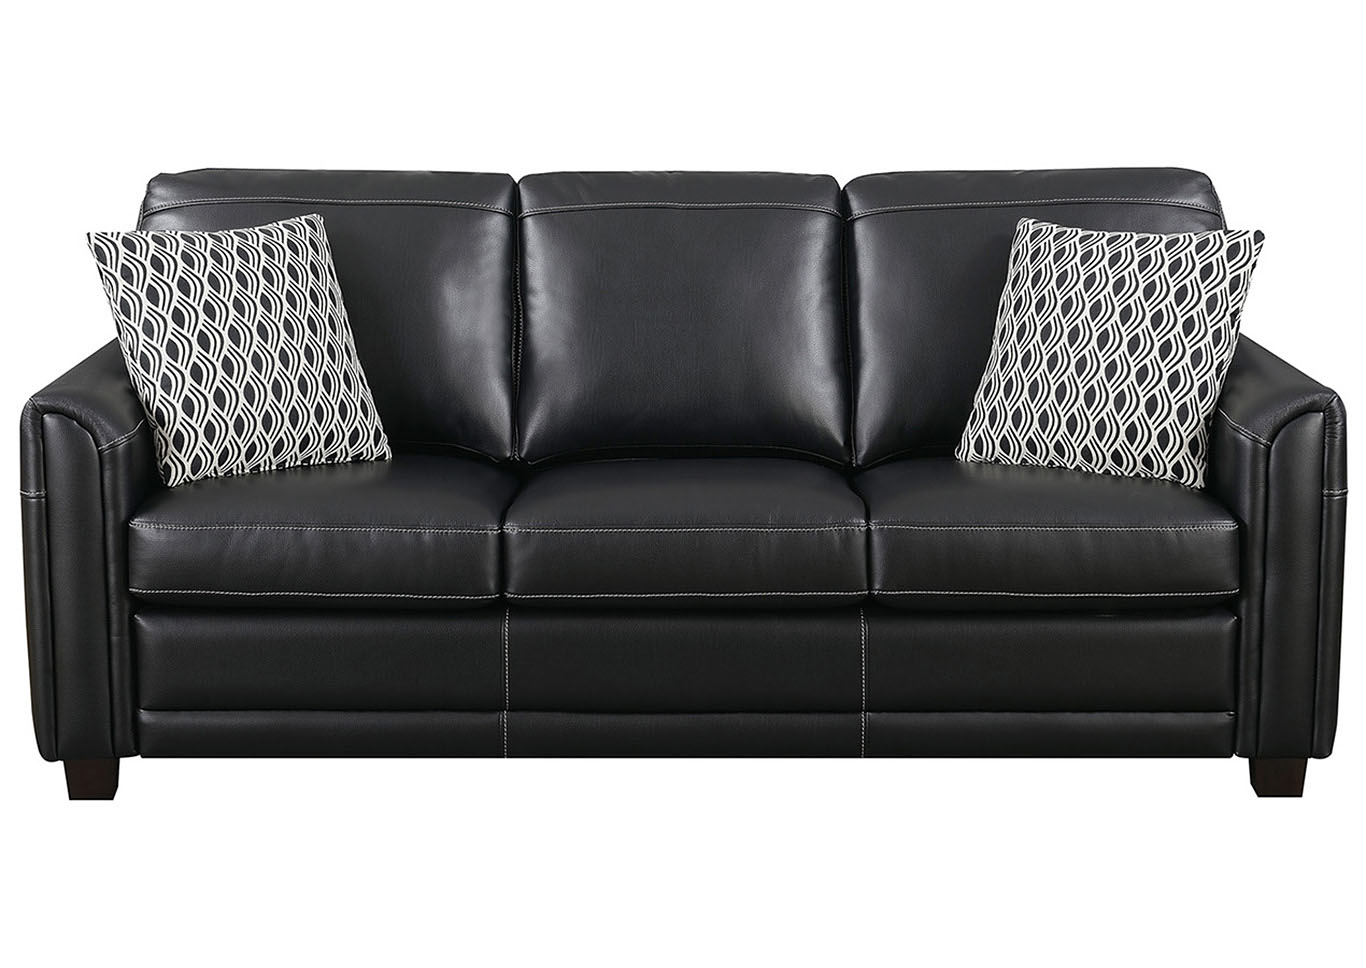 Jennifer Black Stationary Sofa Best, Leather Like Couch